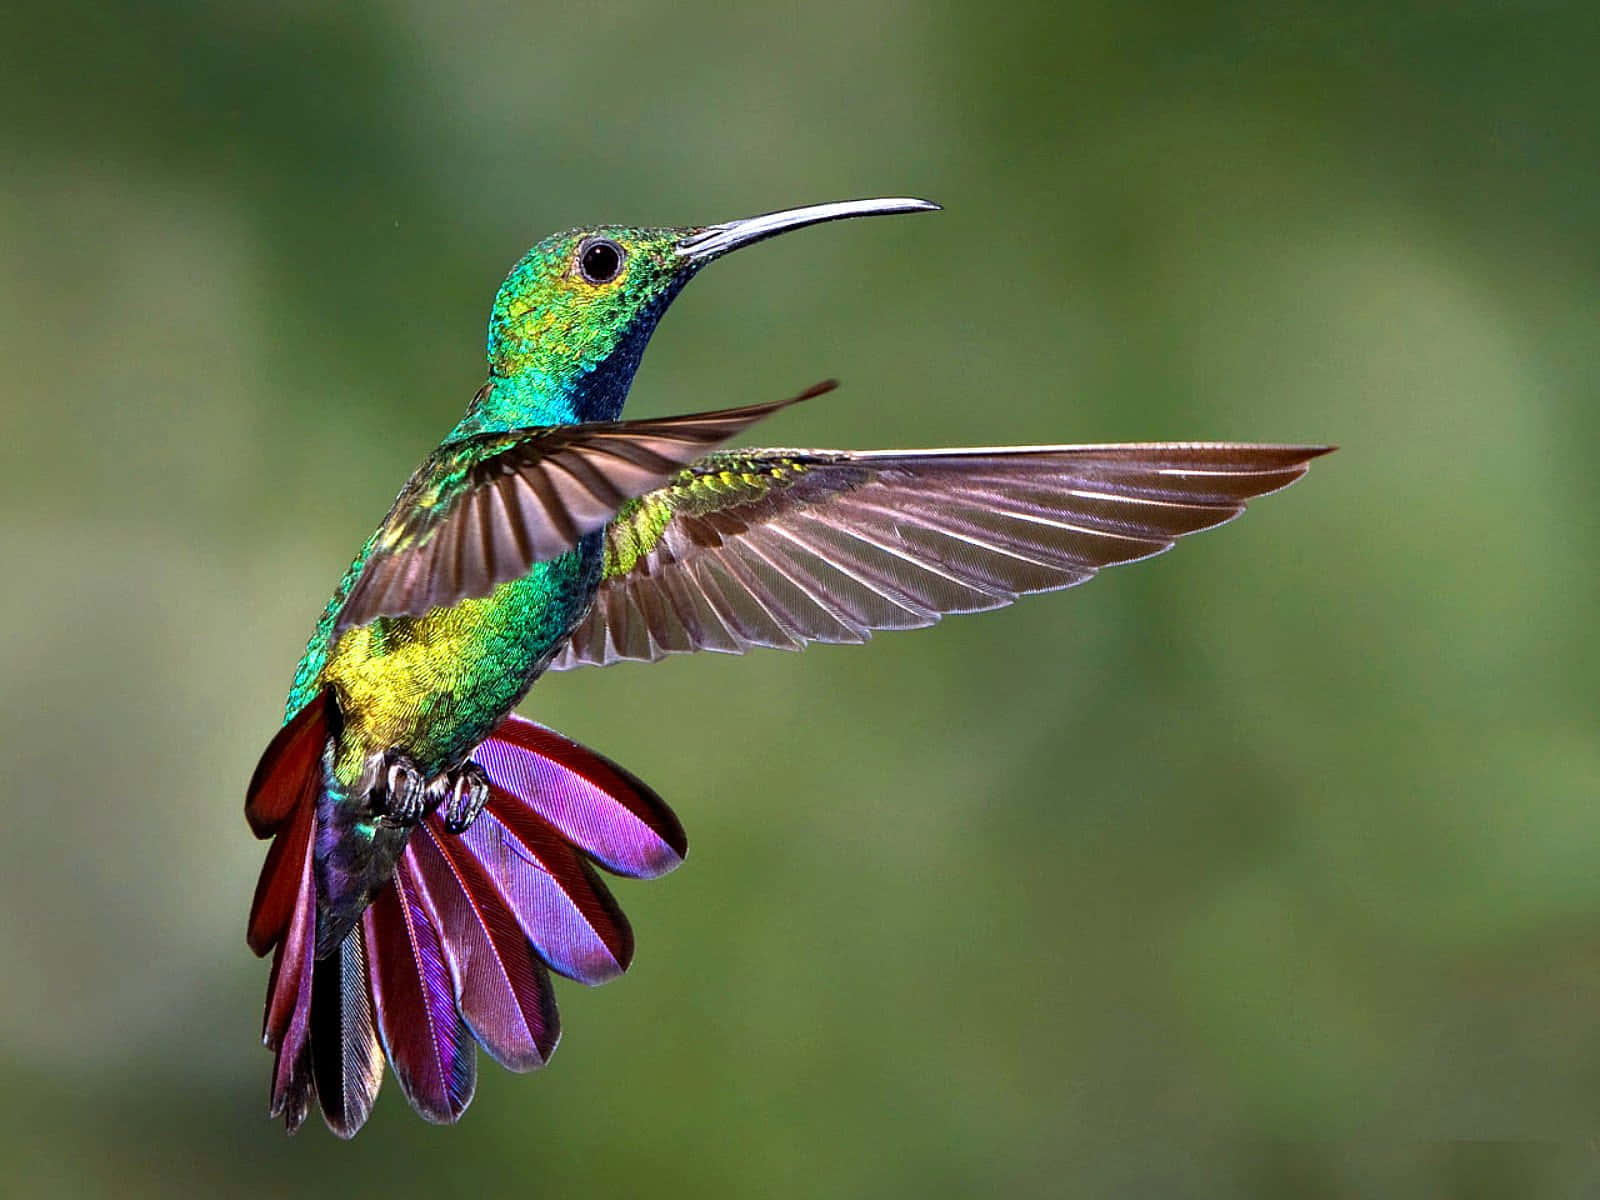 A female hummingbird perched near a flower